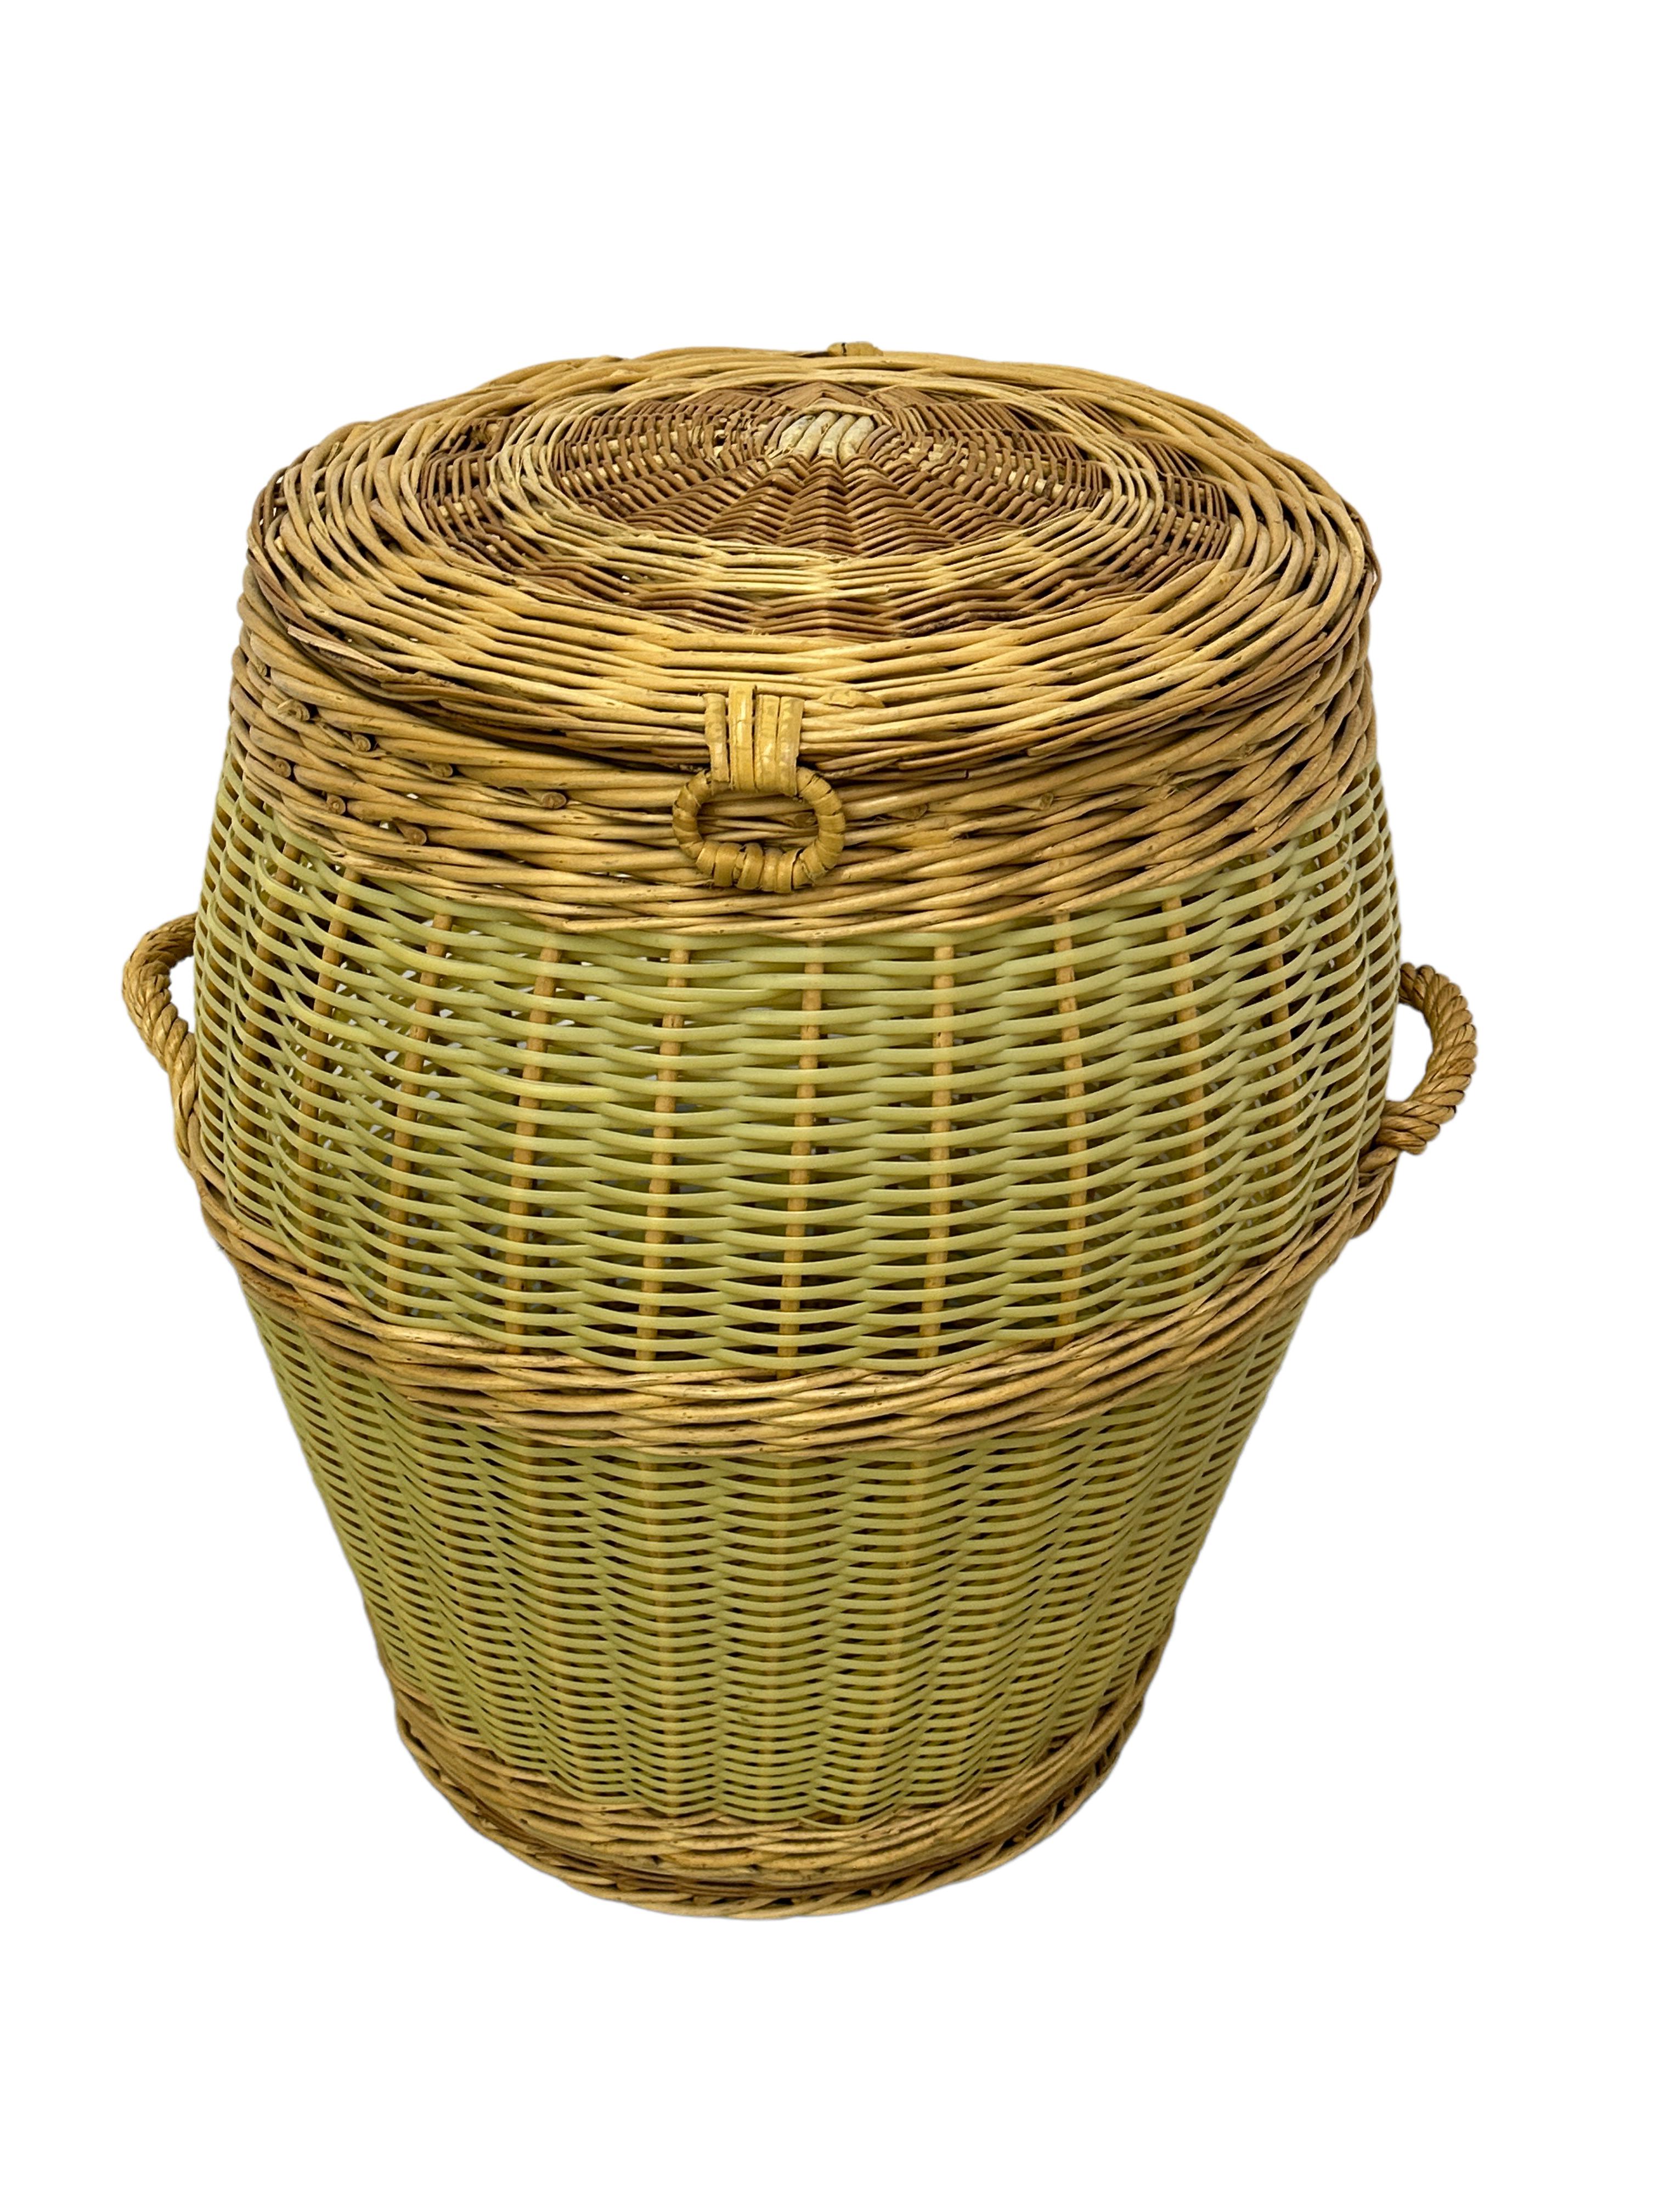 Late 20th Century Stunning Large Vintage Midcentury Wicker Laundry Basket Hamper, 1970s, Italy